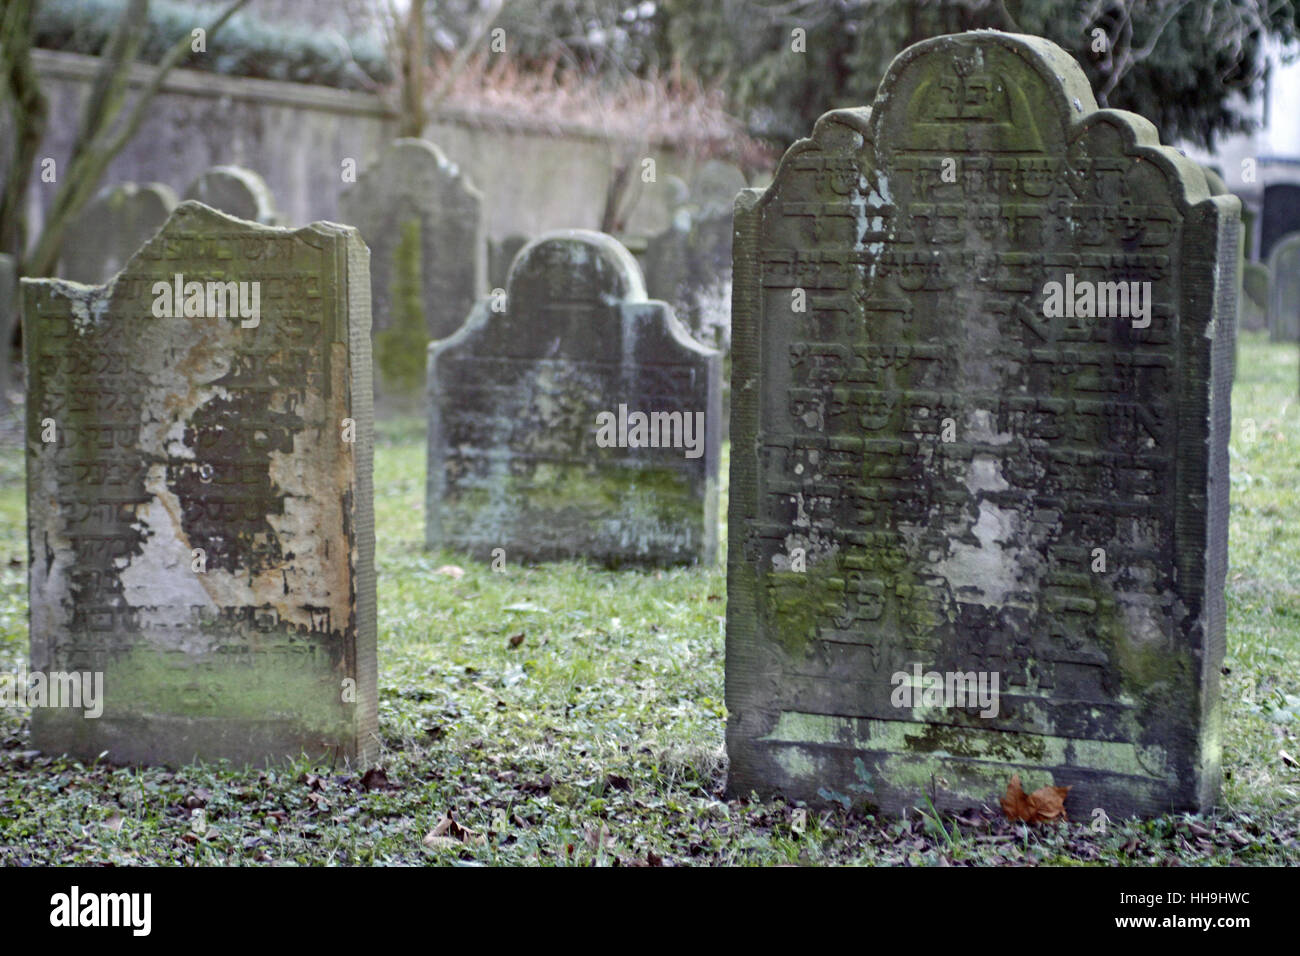 jewish, grave, gravestone, tombstone, jewishness, judaism, graves, tombstones, Stock Photo